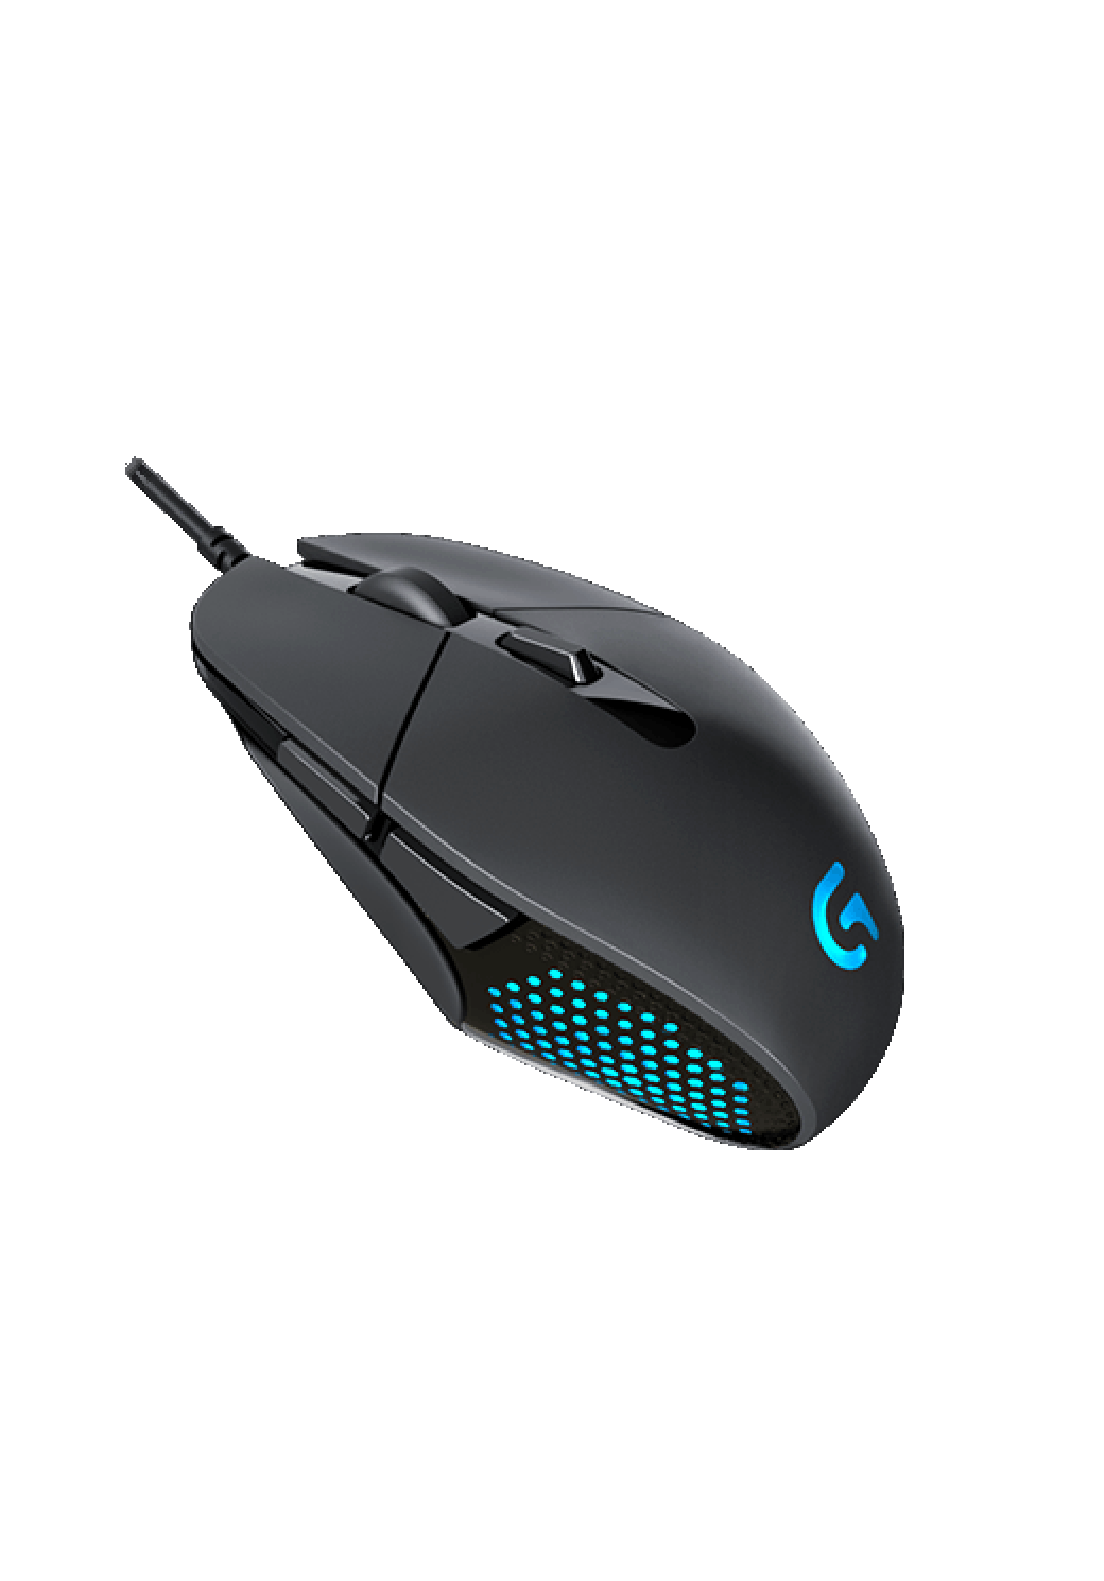 Logitech G302 Daedalus Prime MOBA Gaming Mouse 97855105721